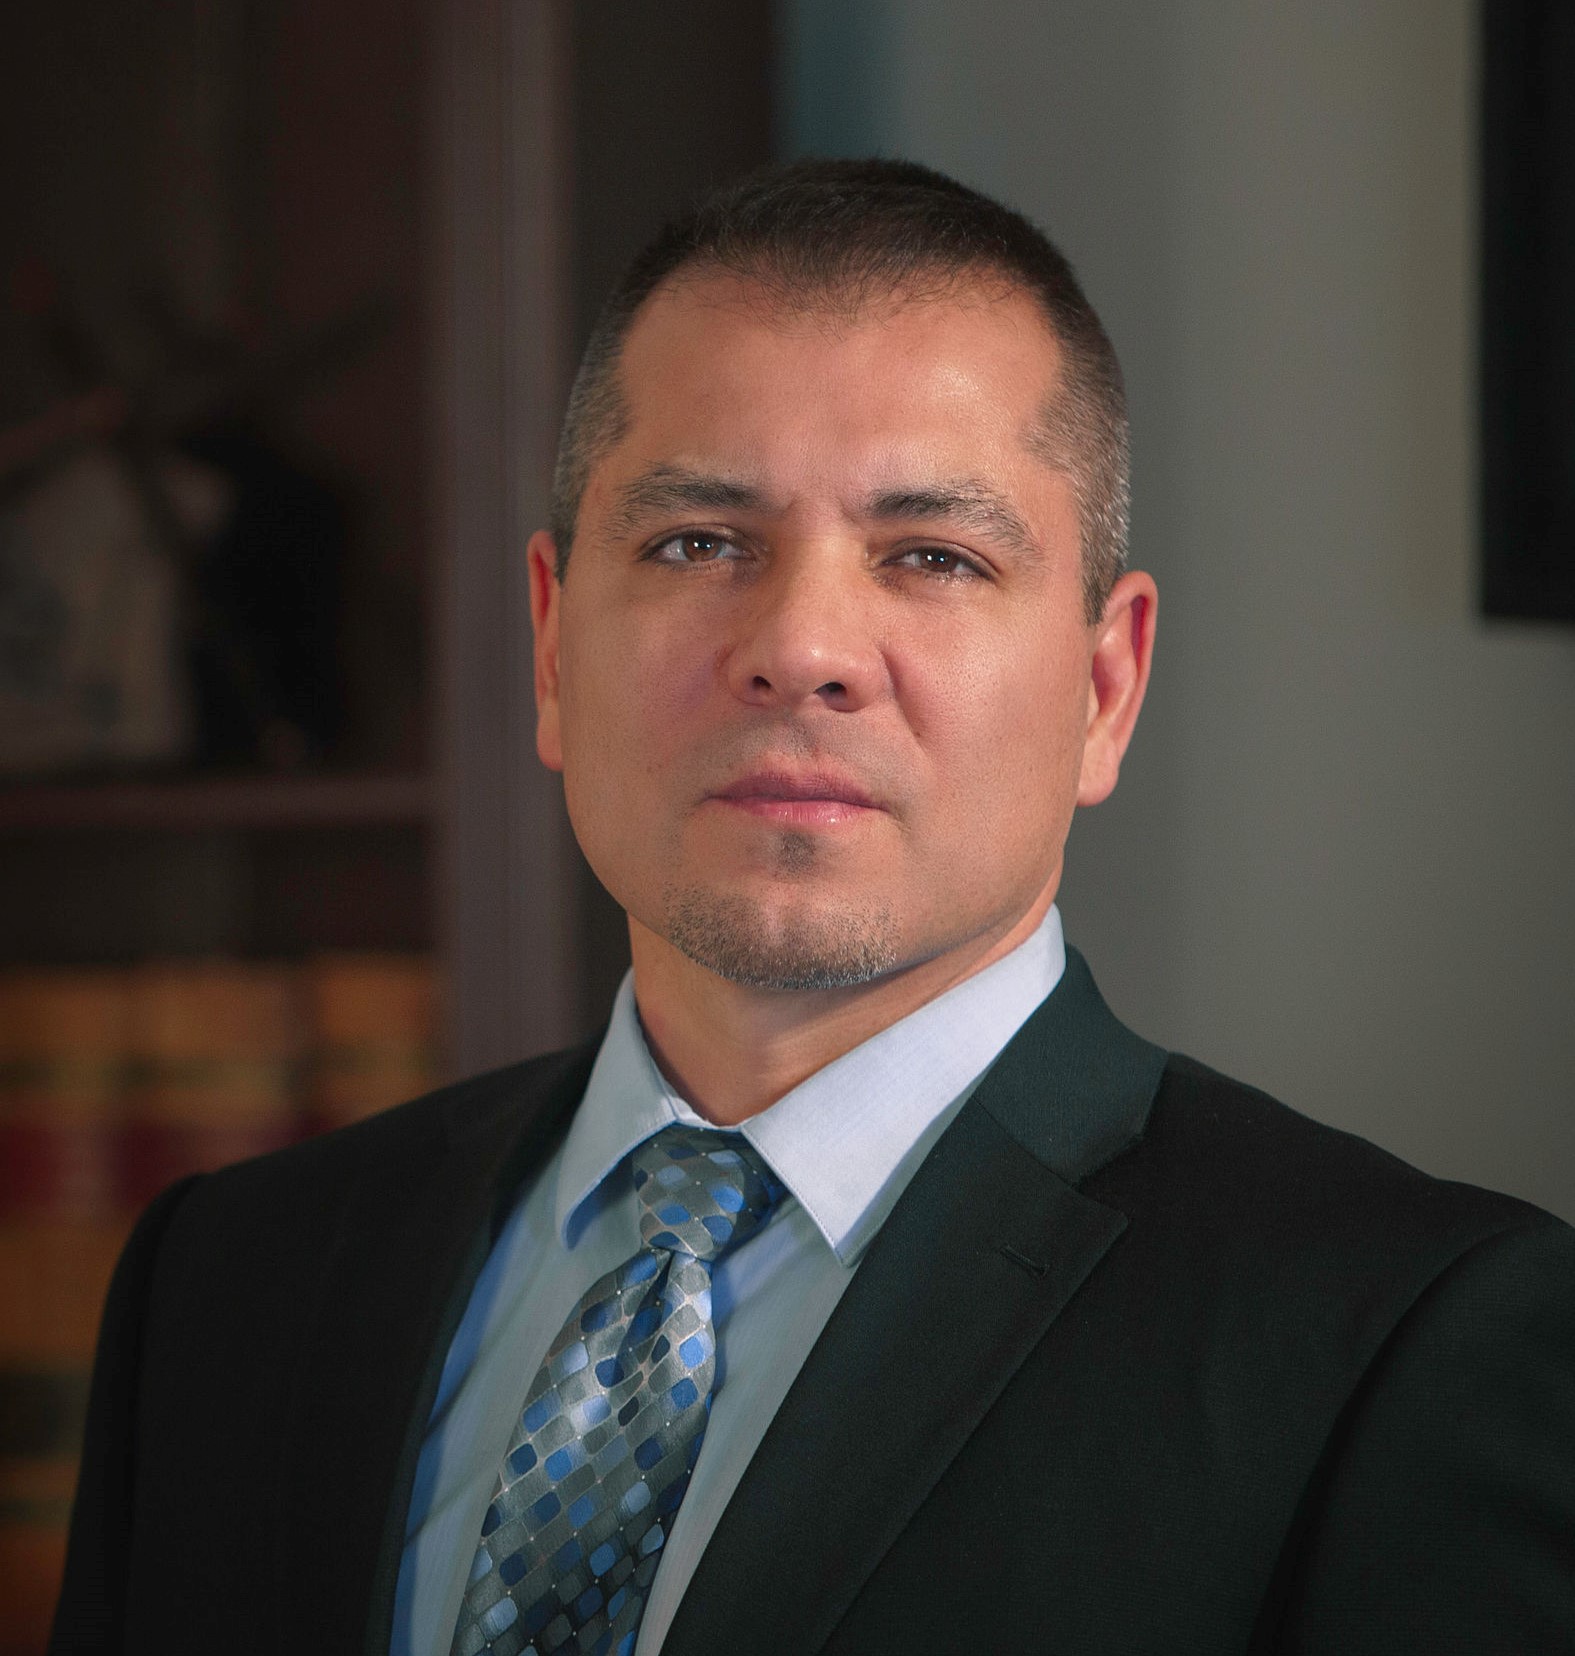 DUI Attorney Marc Grano - Rio Arriba County, NM - DUIAttorney.com